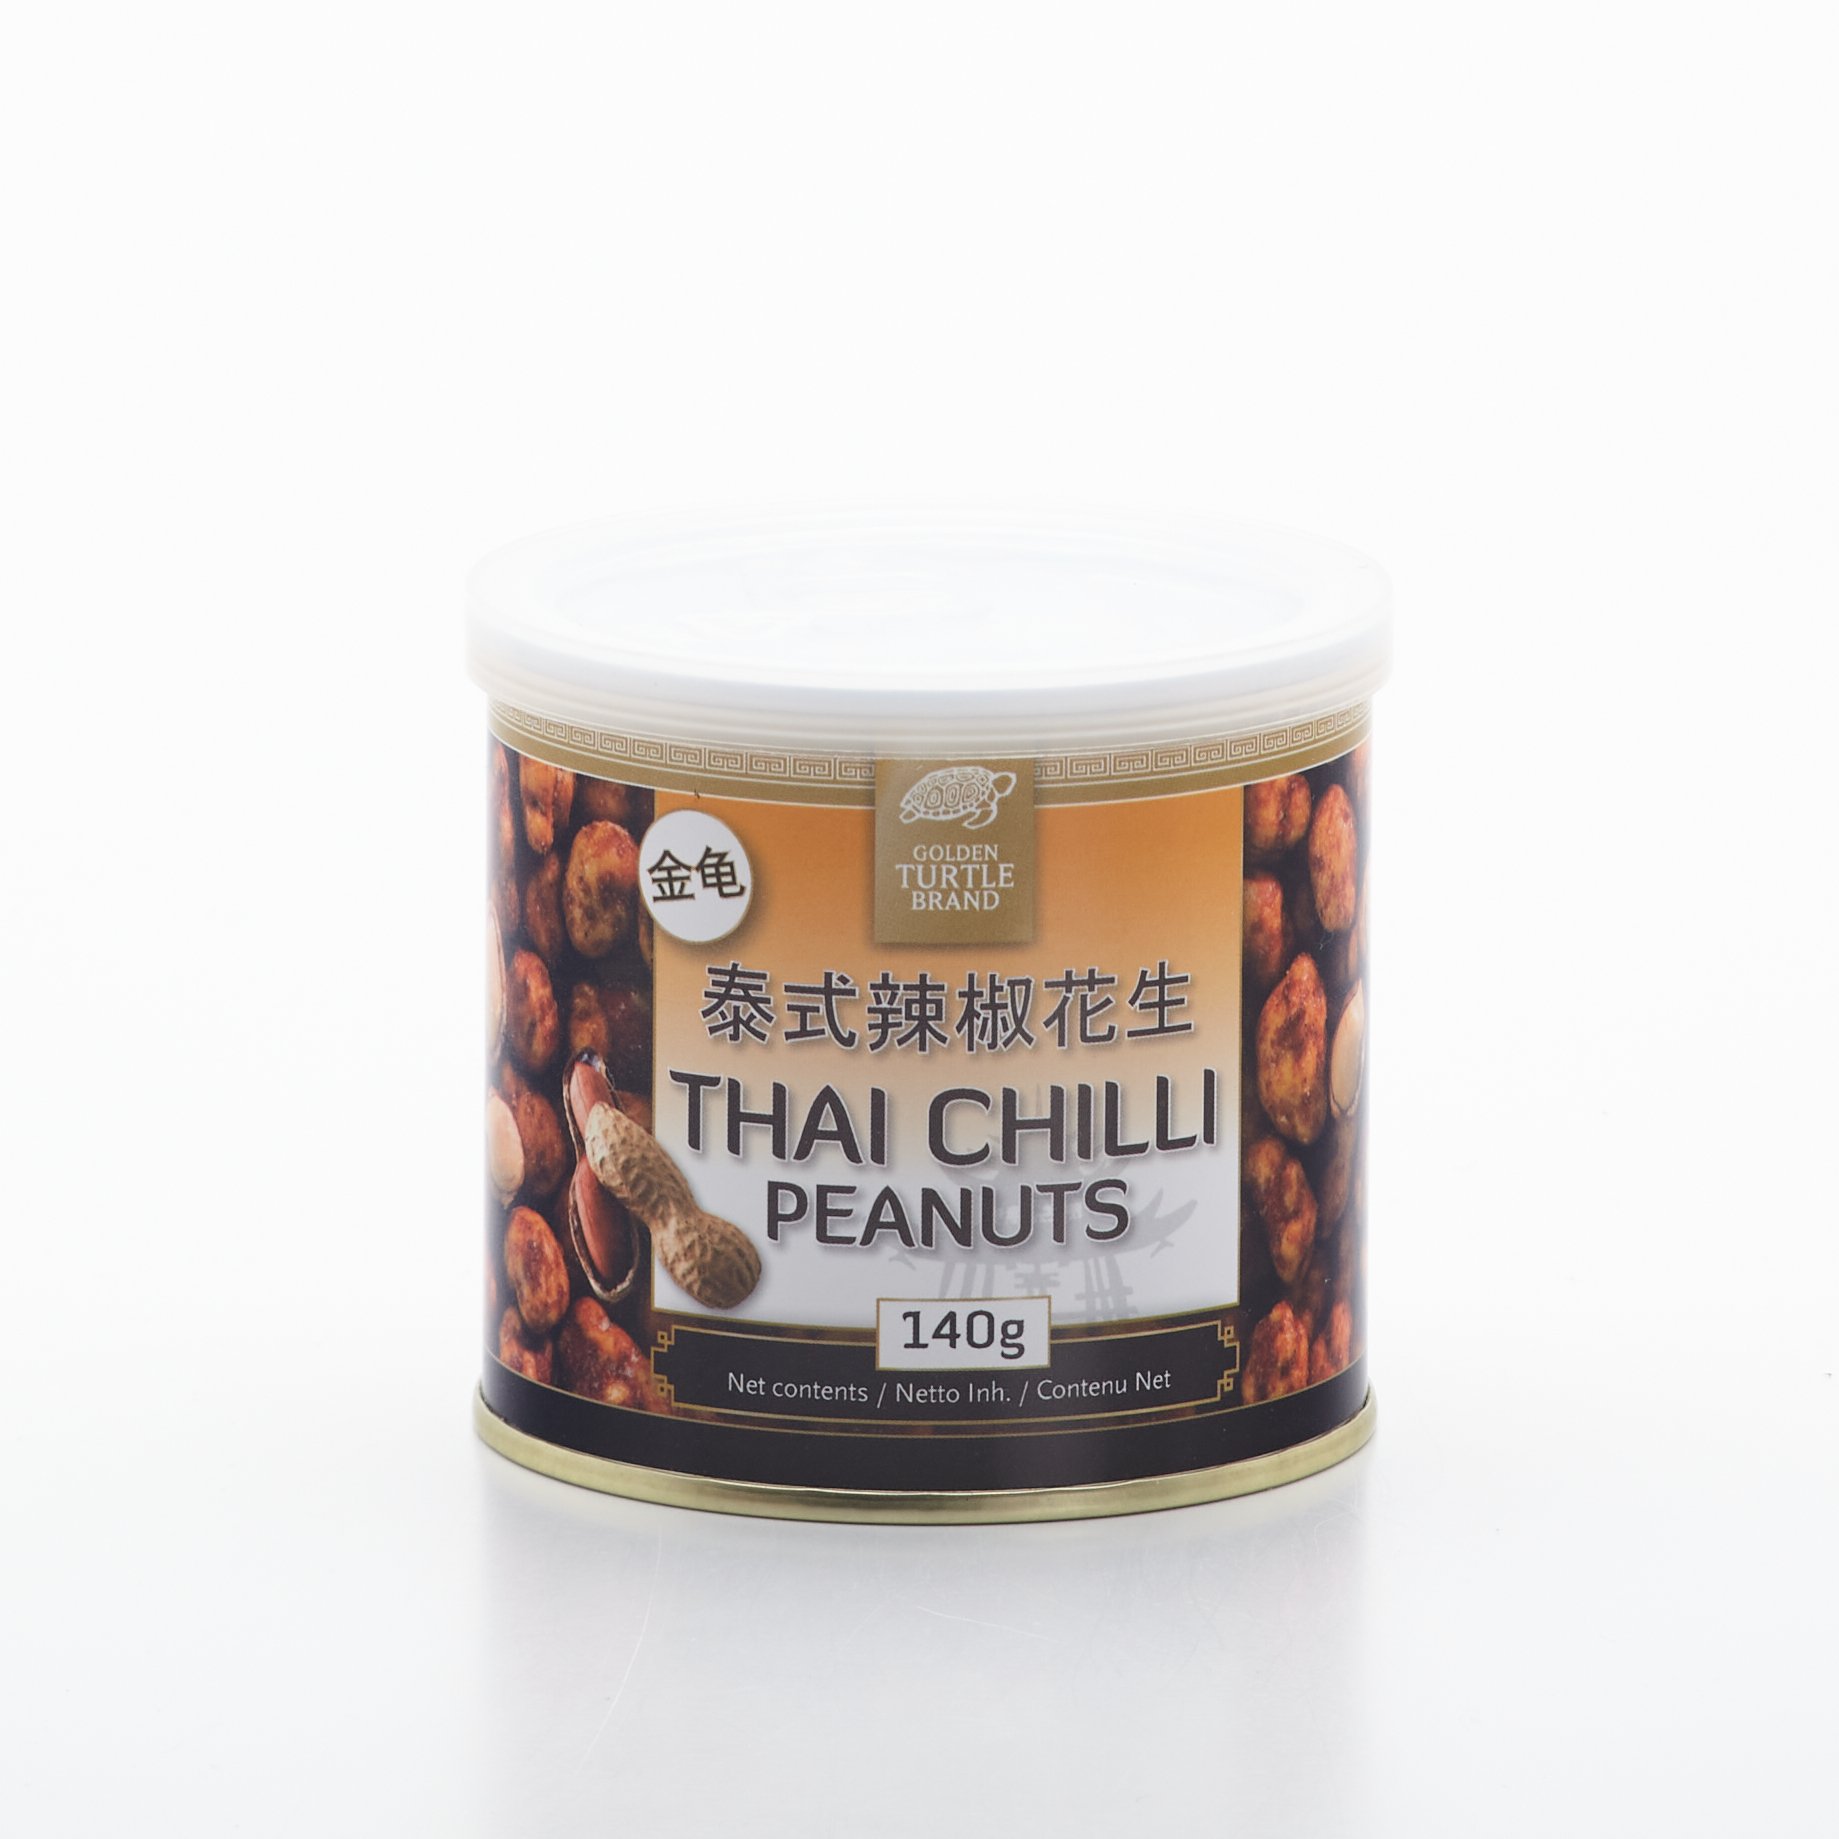 Thai chilli peanuts 140g